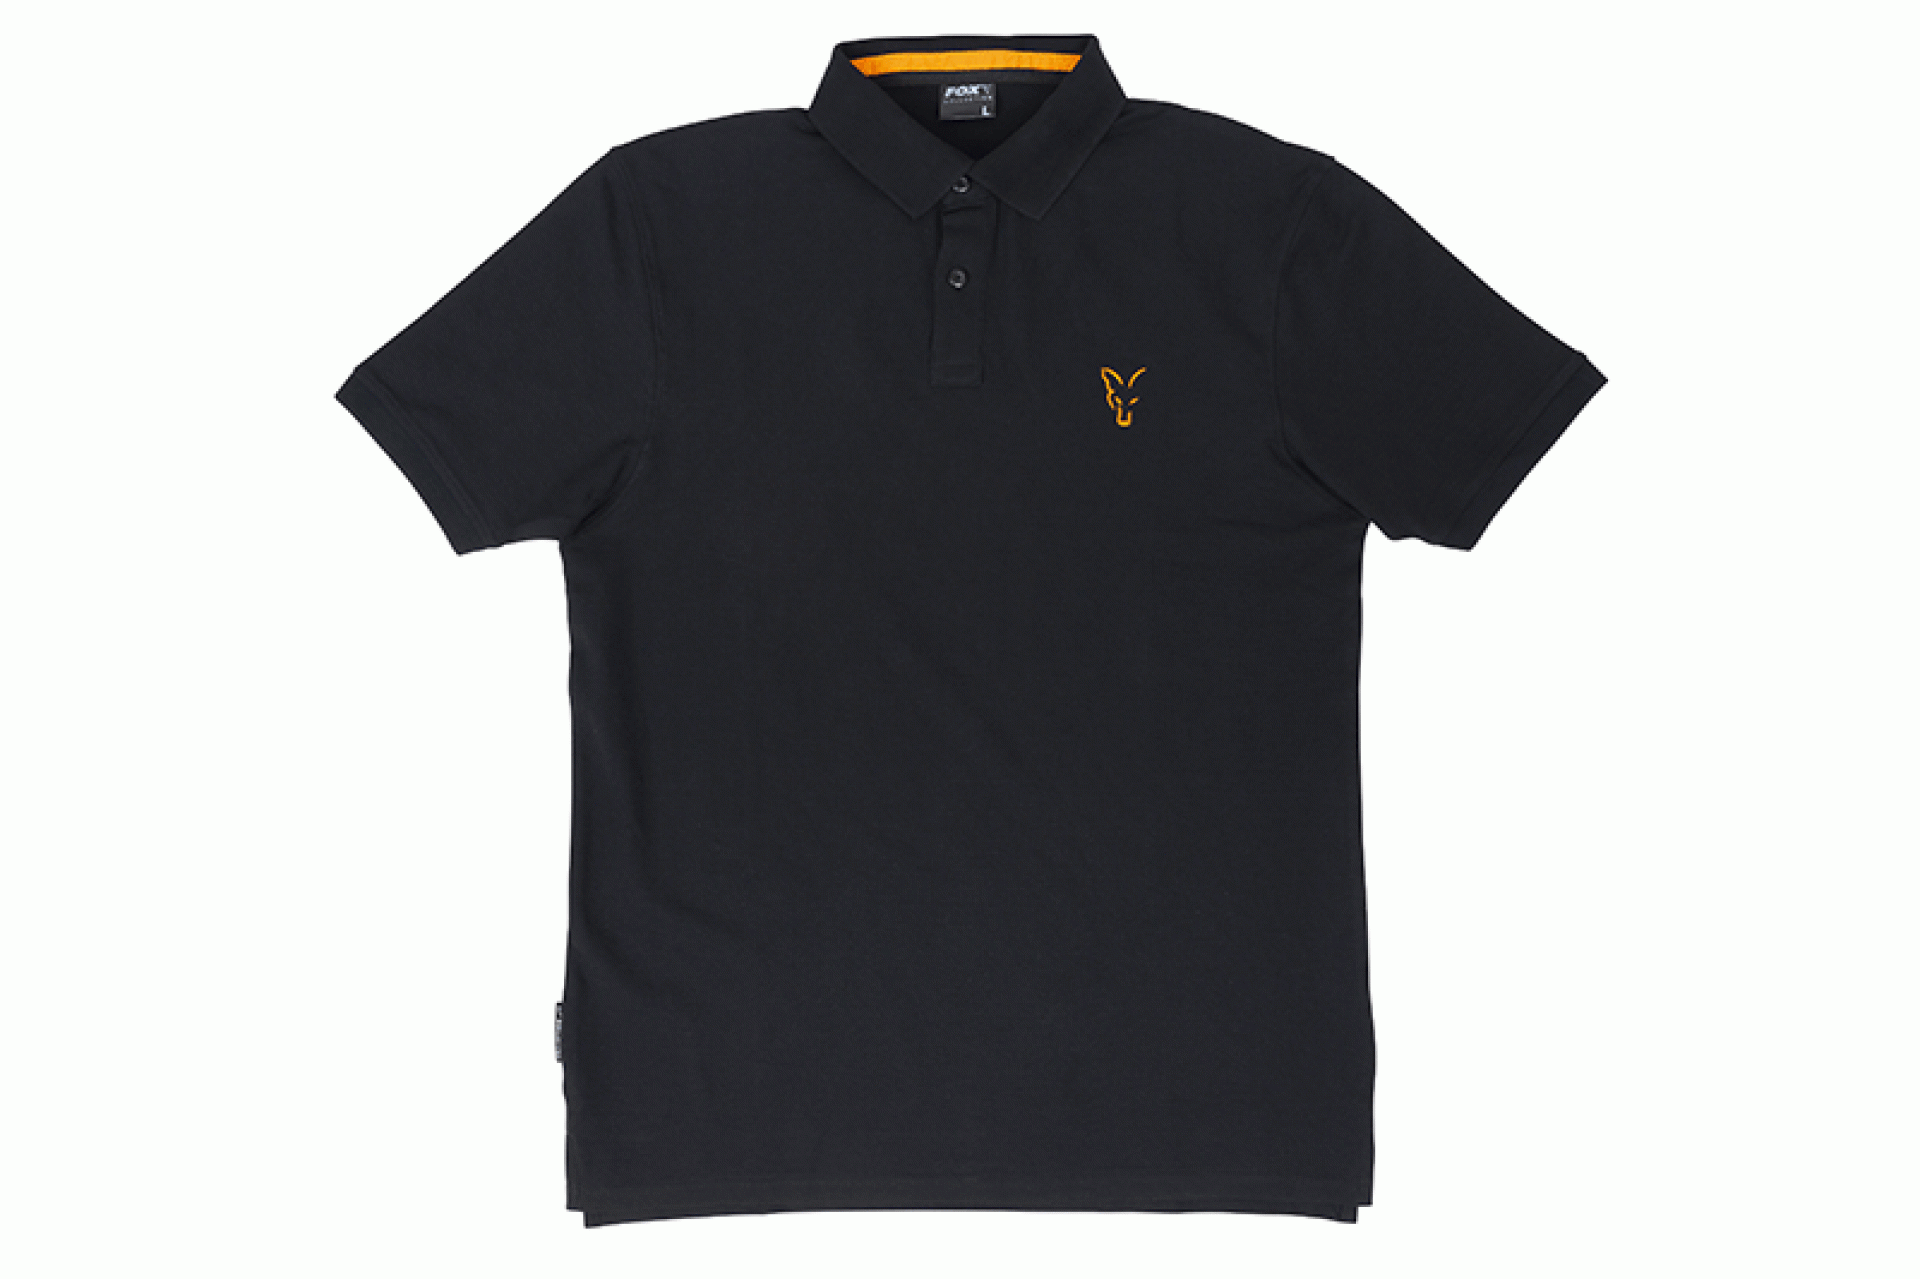 Fox Collection Black Orange Polo Shirt